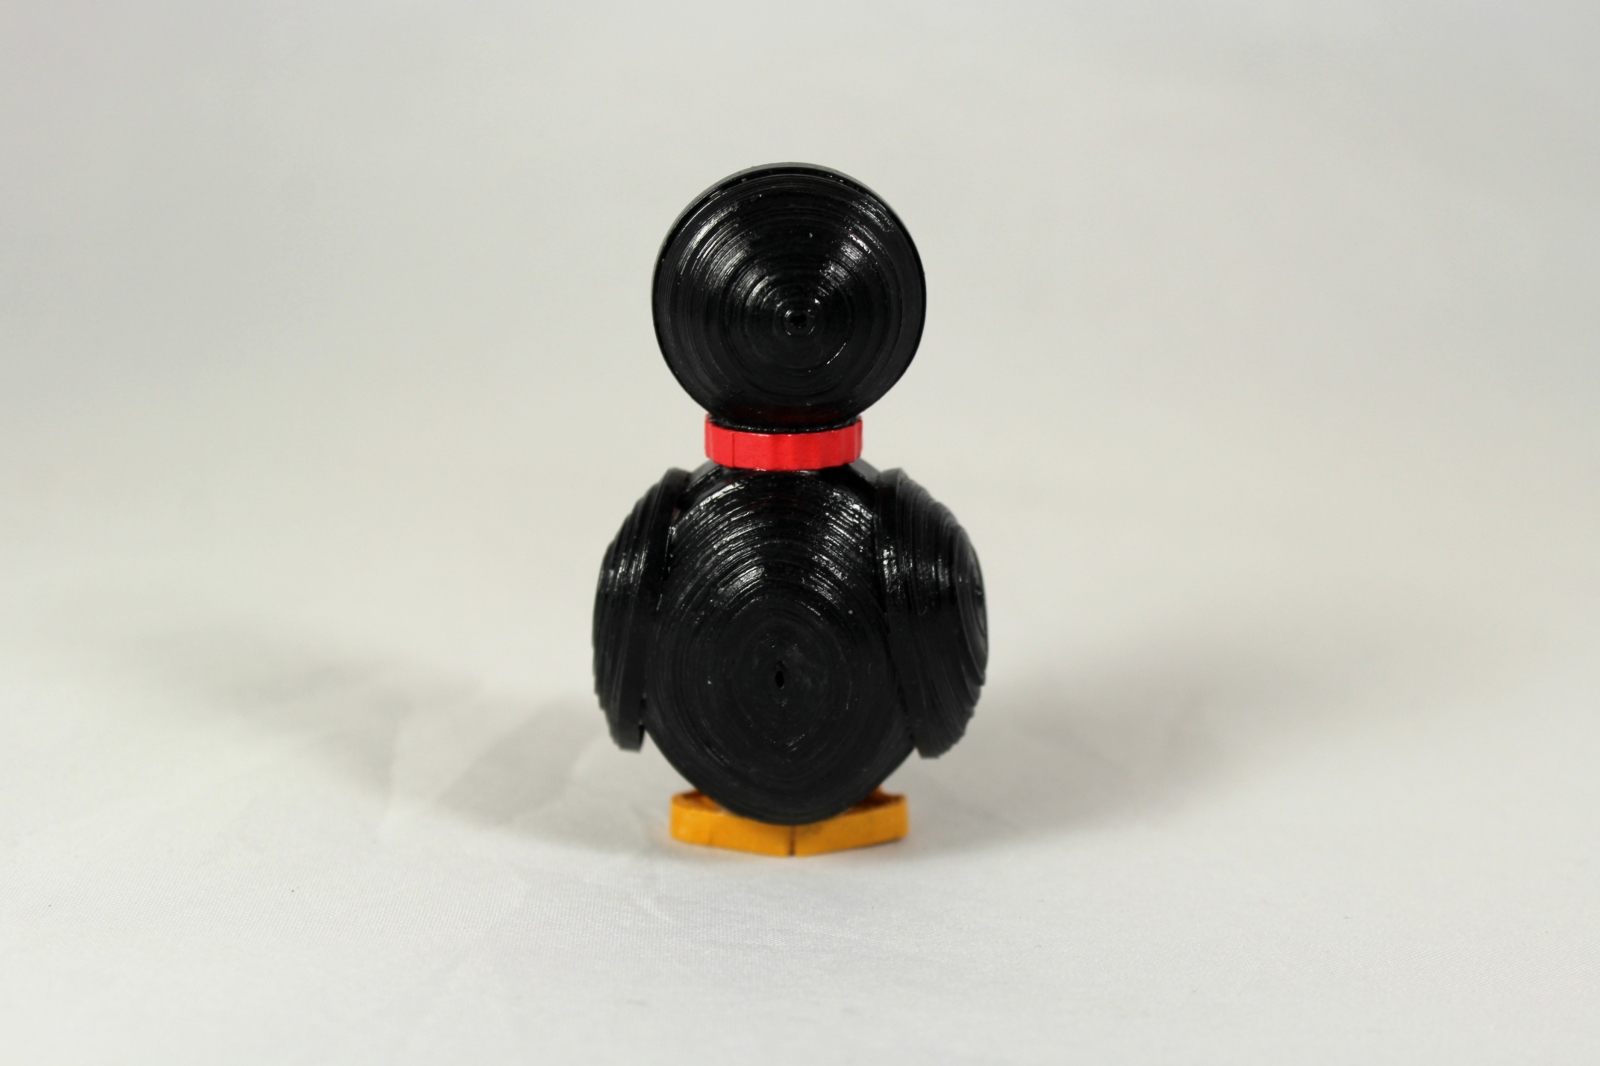 Fisher-Price - Little People - Figurine Pingouin